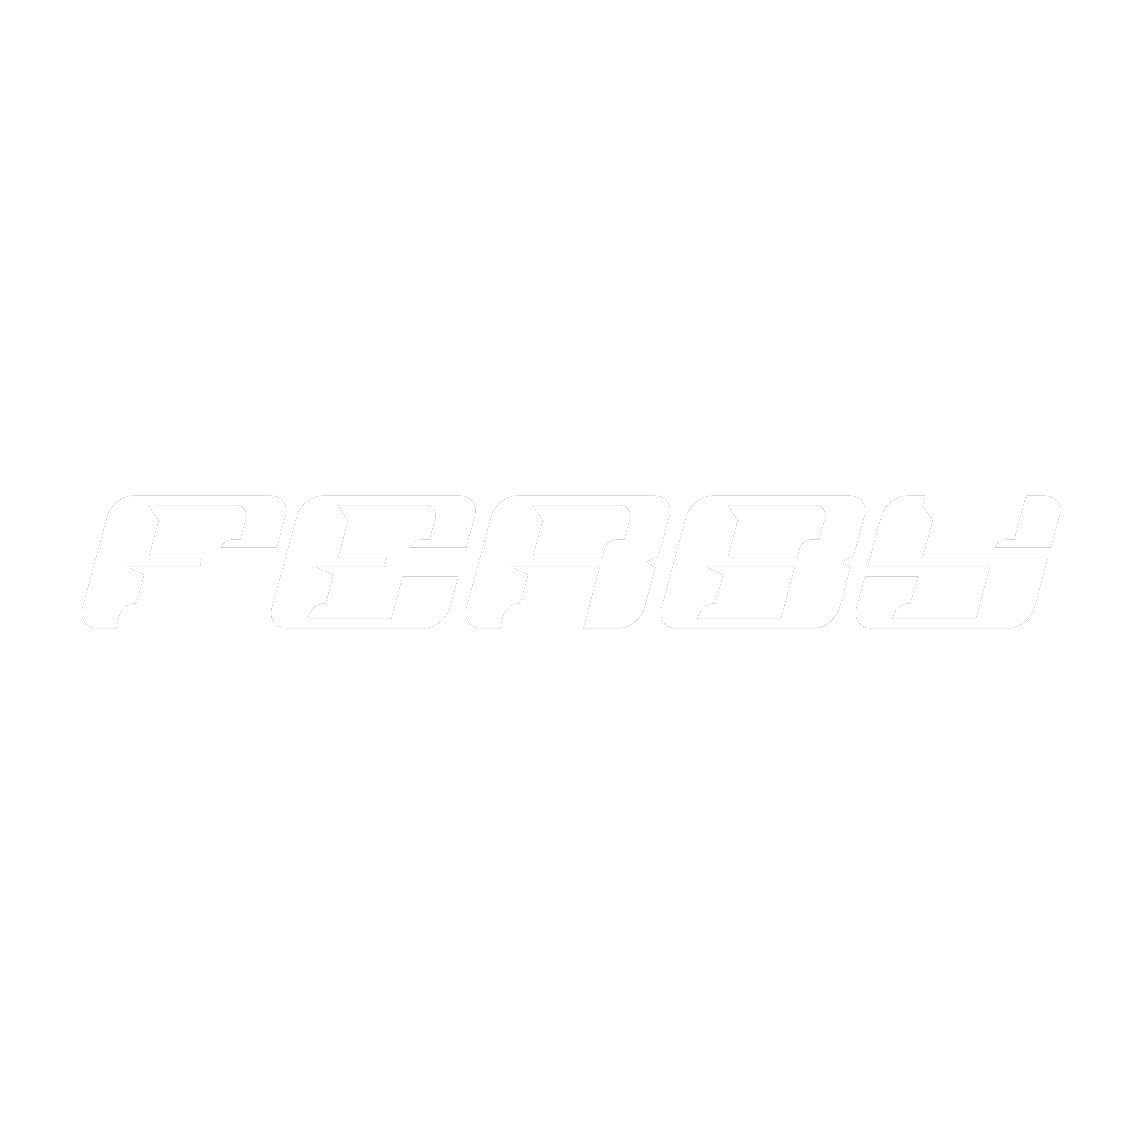 FERBY logo